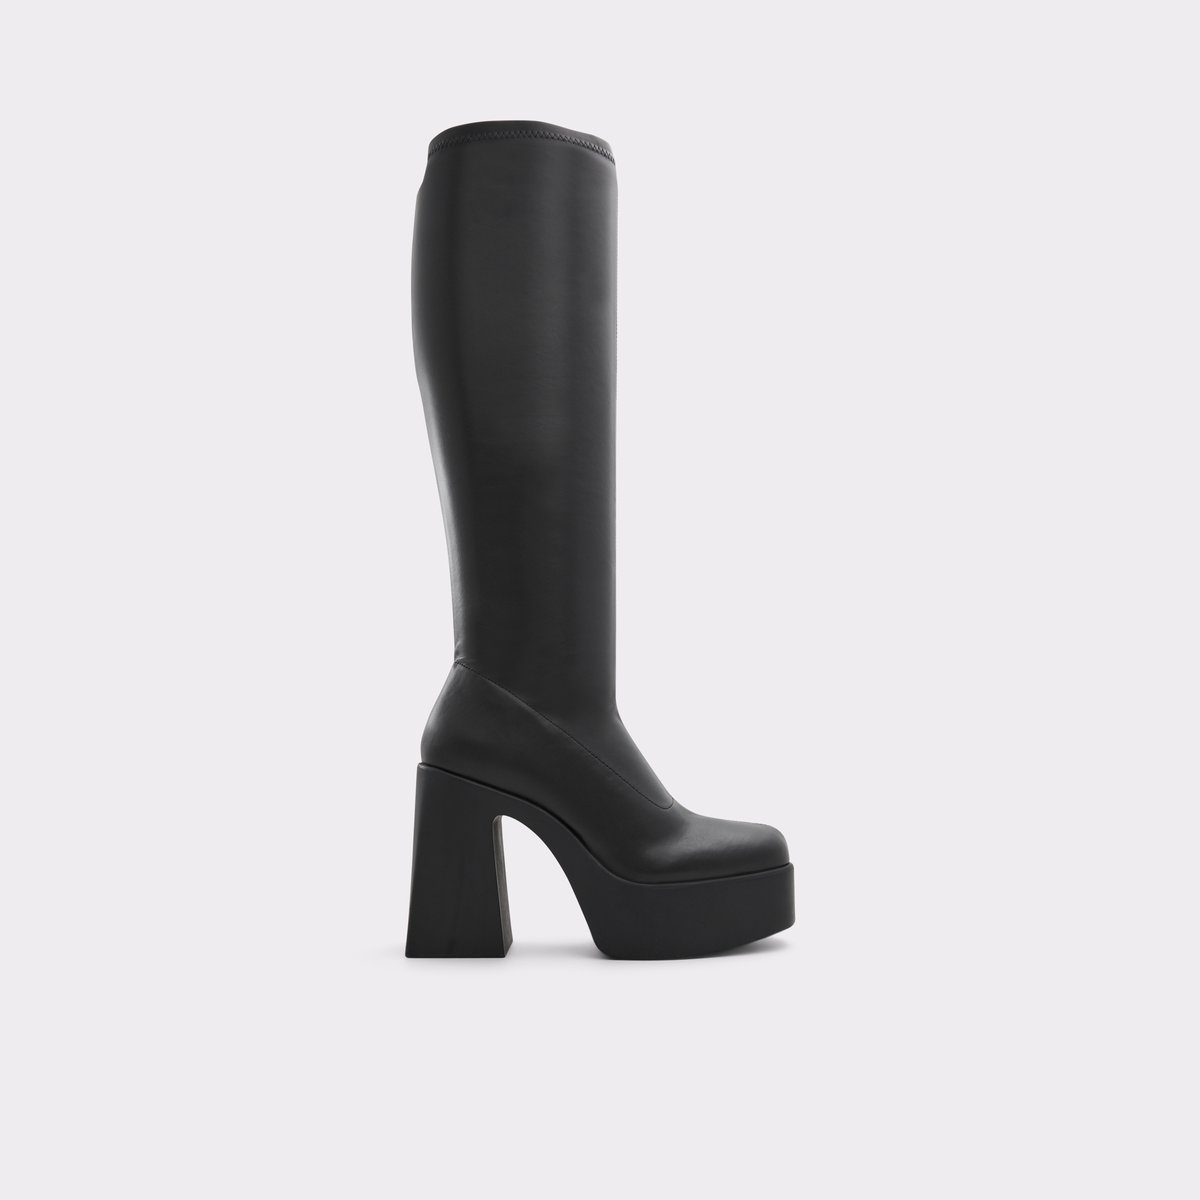 Moulin Black Synthetic Women's Dress boots | ALDO Canada